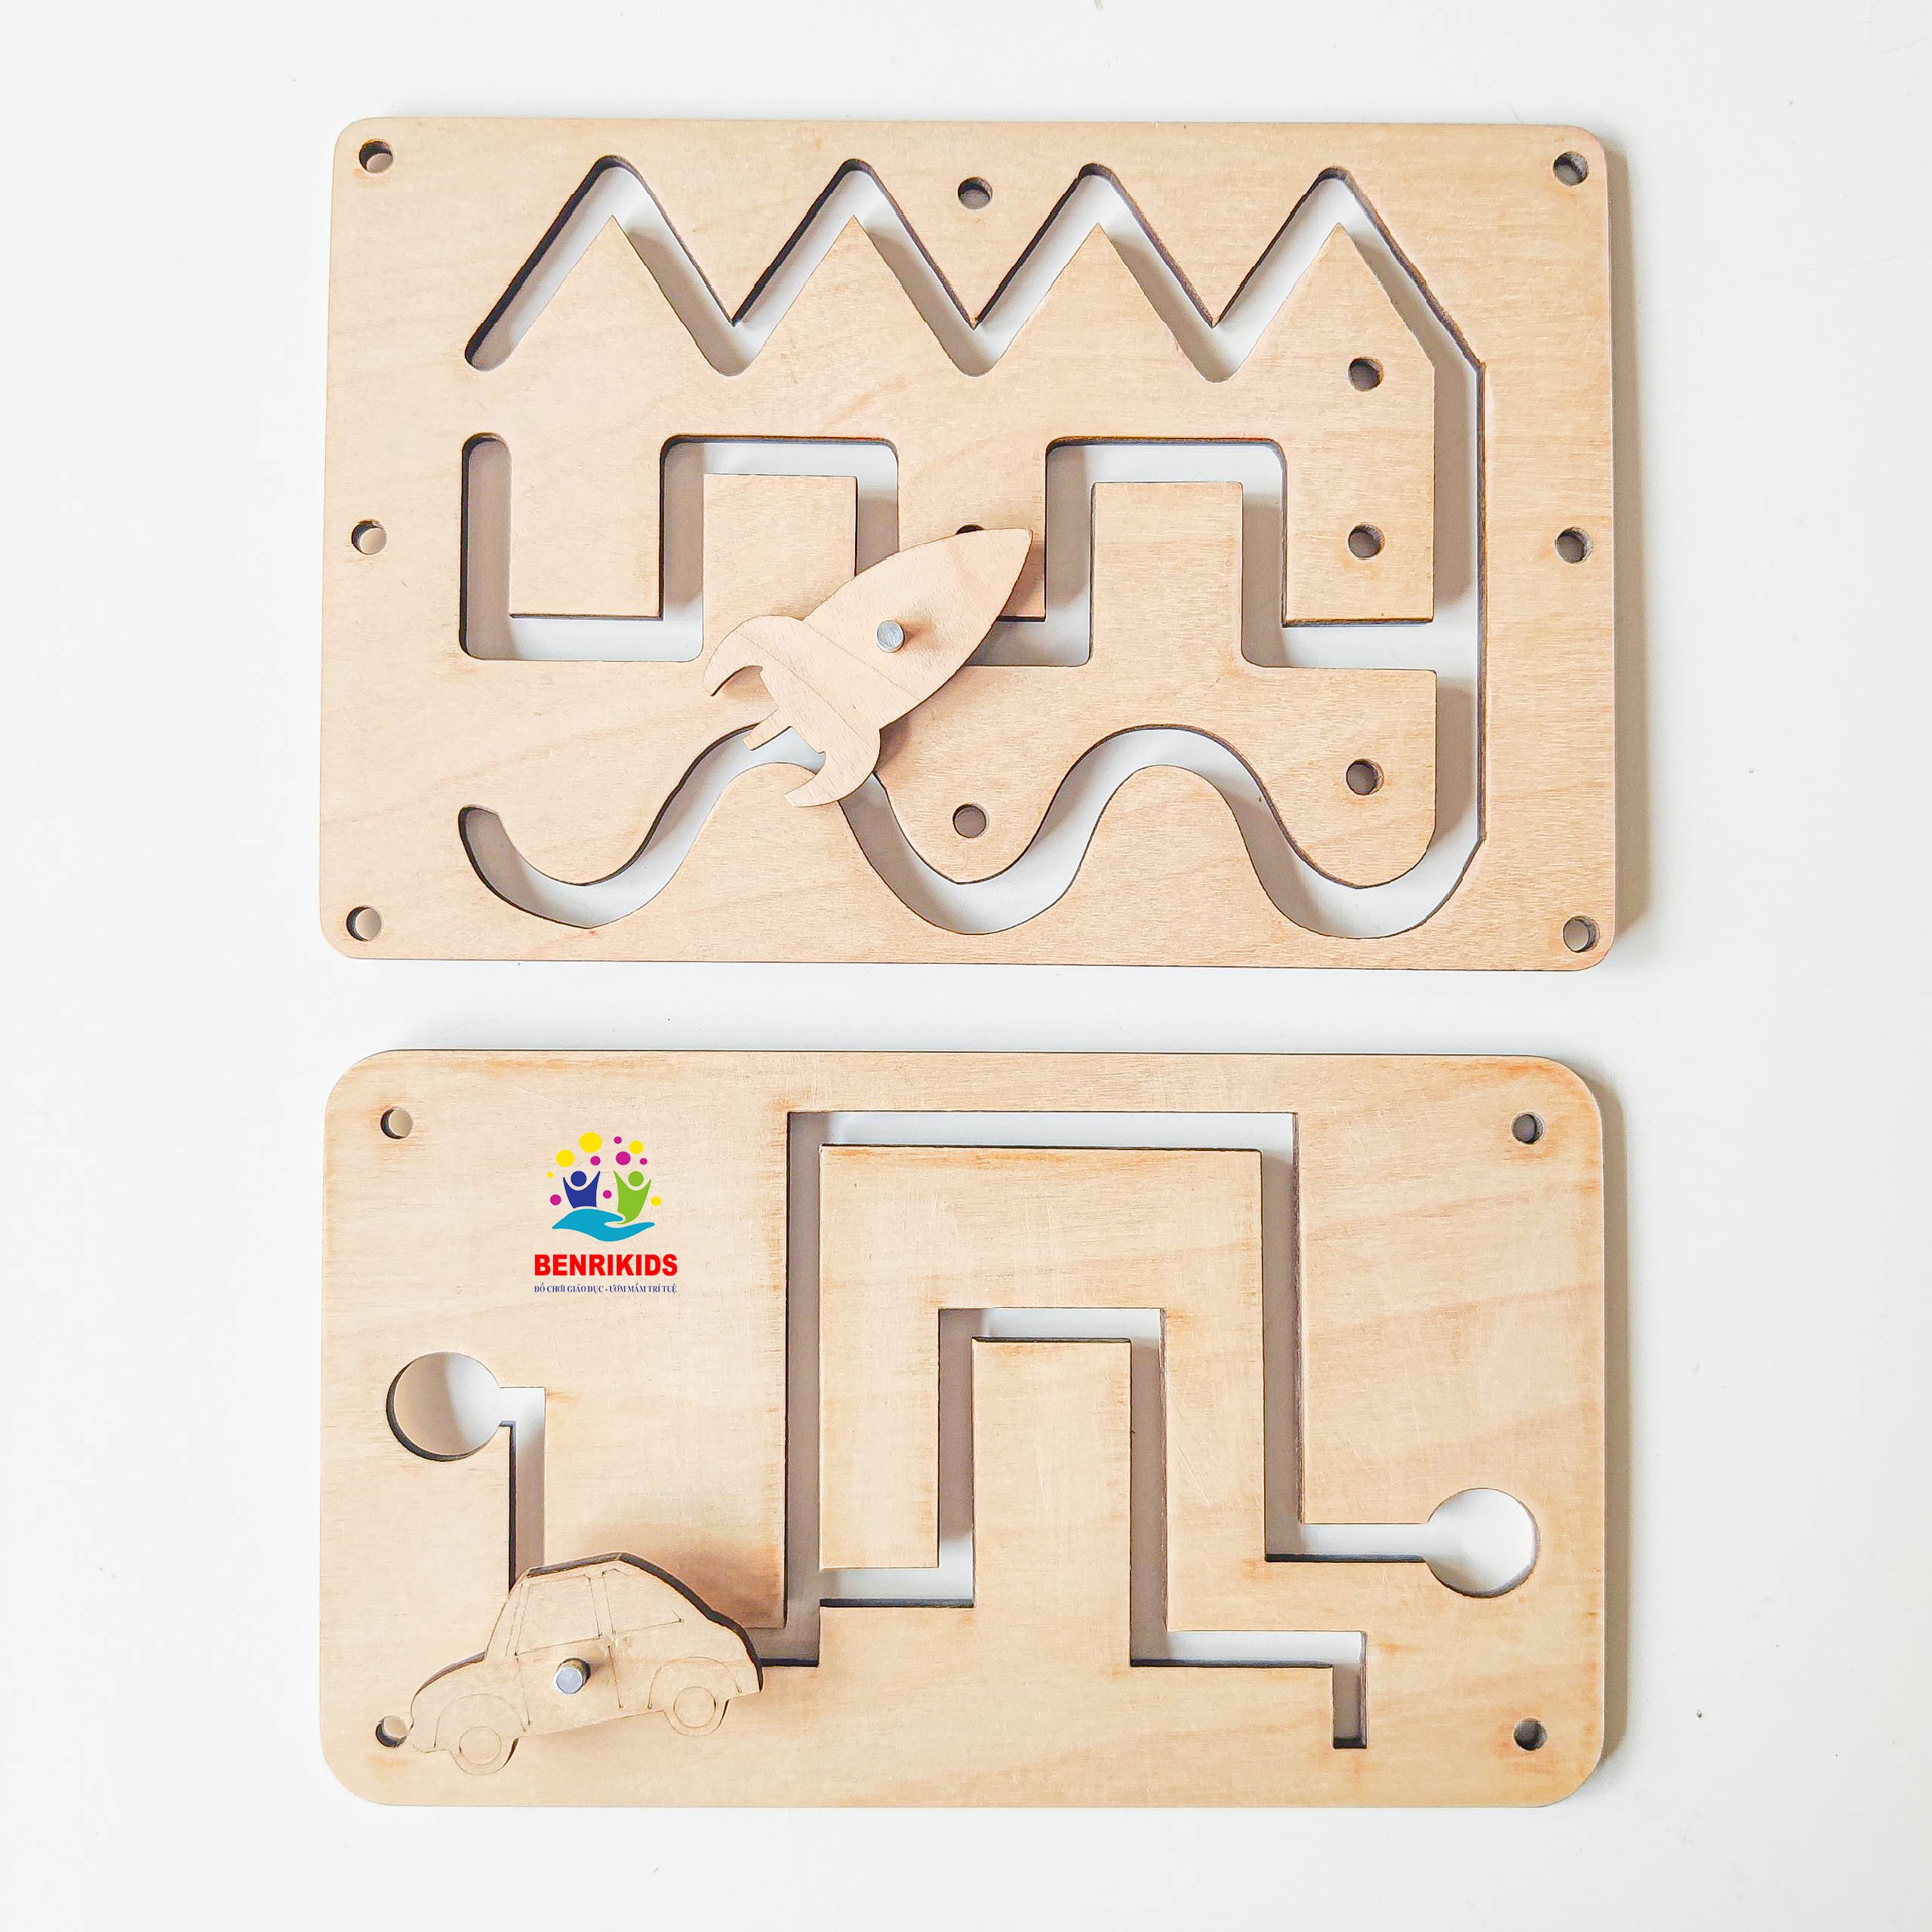 Benrikids busy board DIY board maze accessories kids DIY craft toy